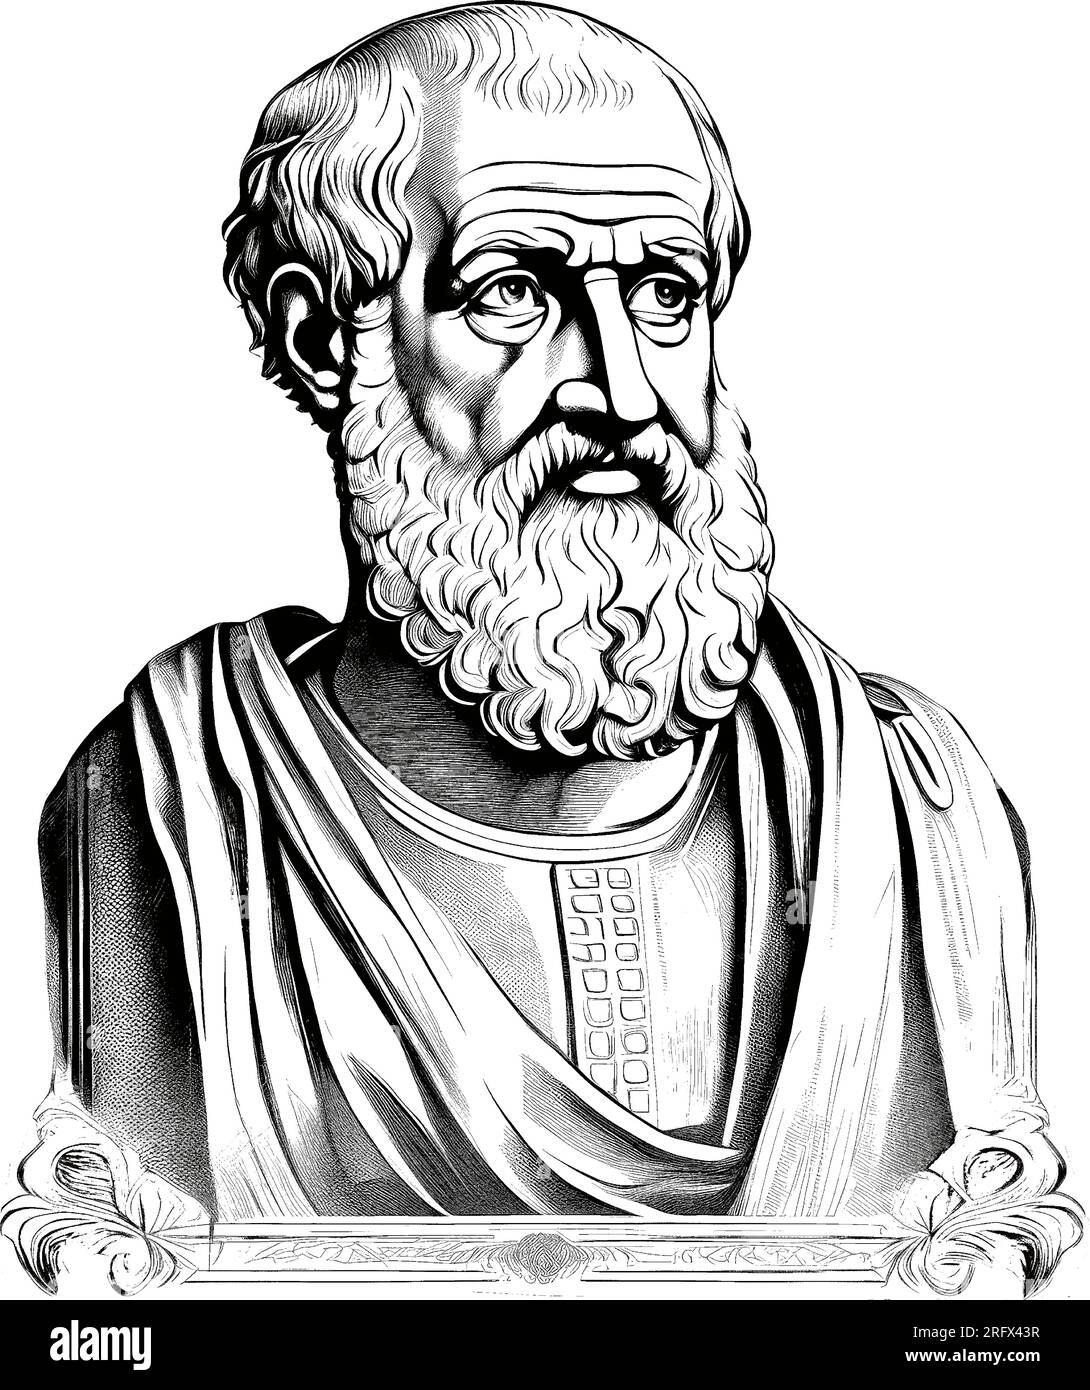 Famous ancient greek philosopher aristotle Stock Vector Images - Alamy